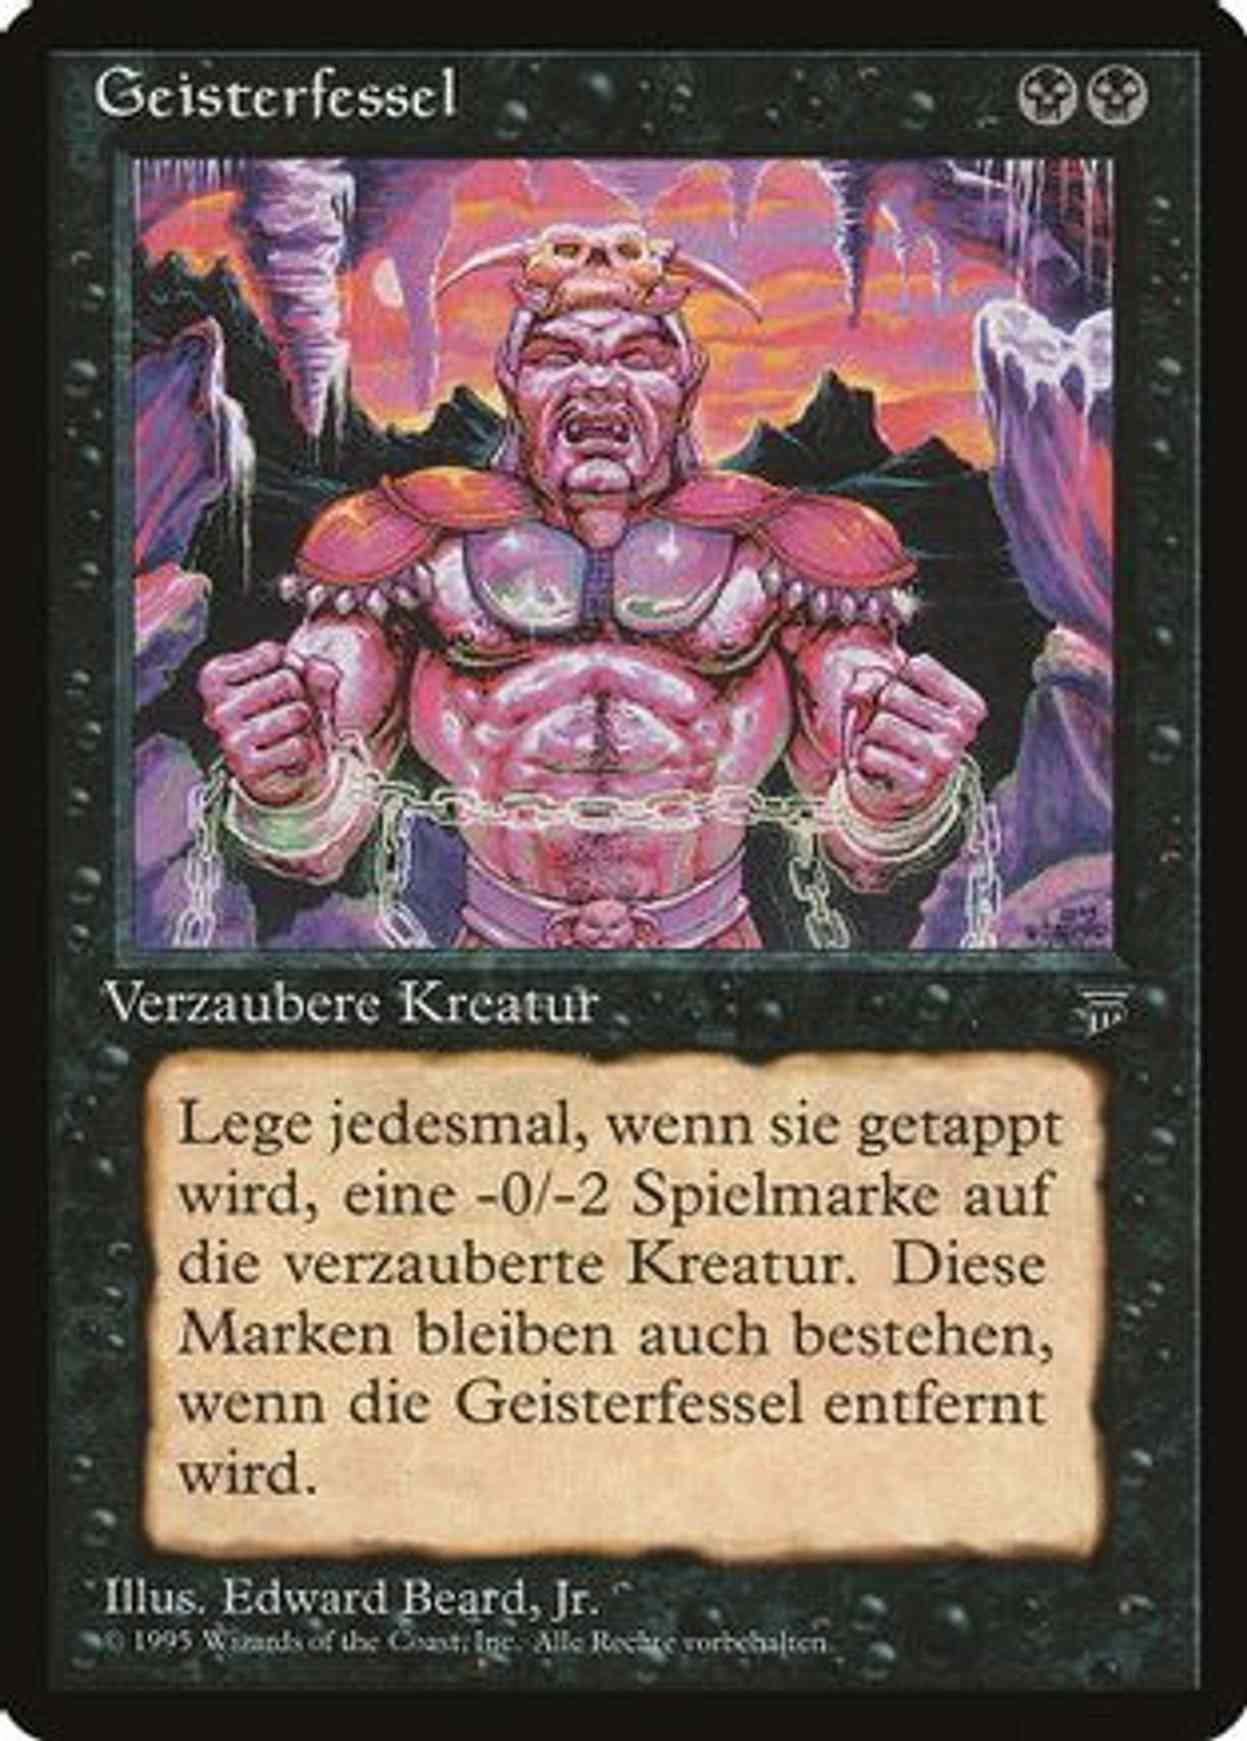 Spirit Shackle (German) - "Geisterfessel" magic card front